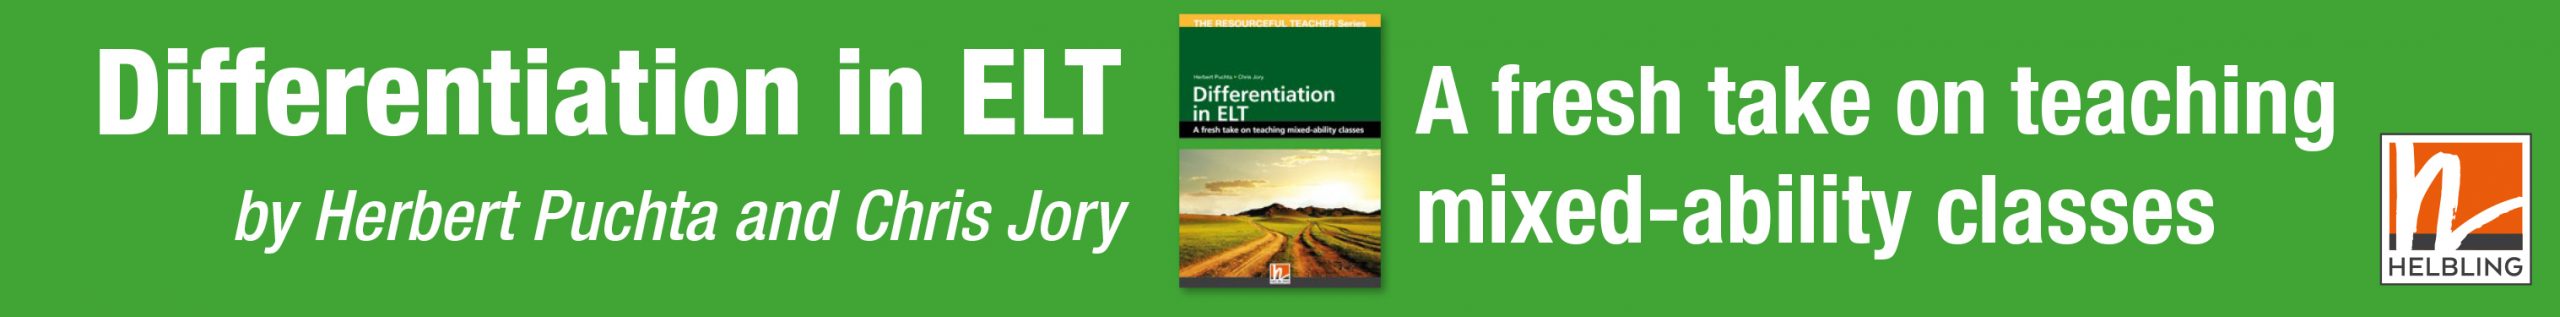 Helbing Differentiation in ELT - Leaderboard Desktop